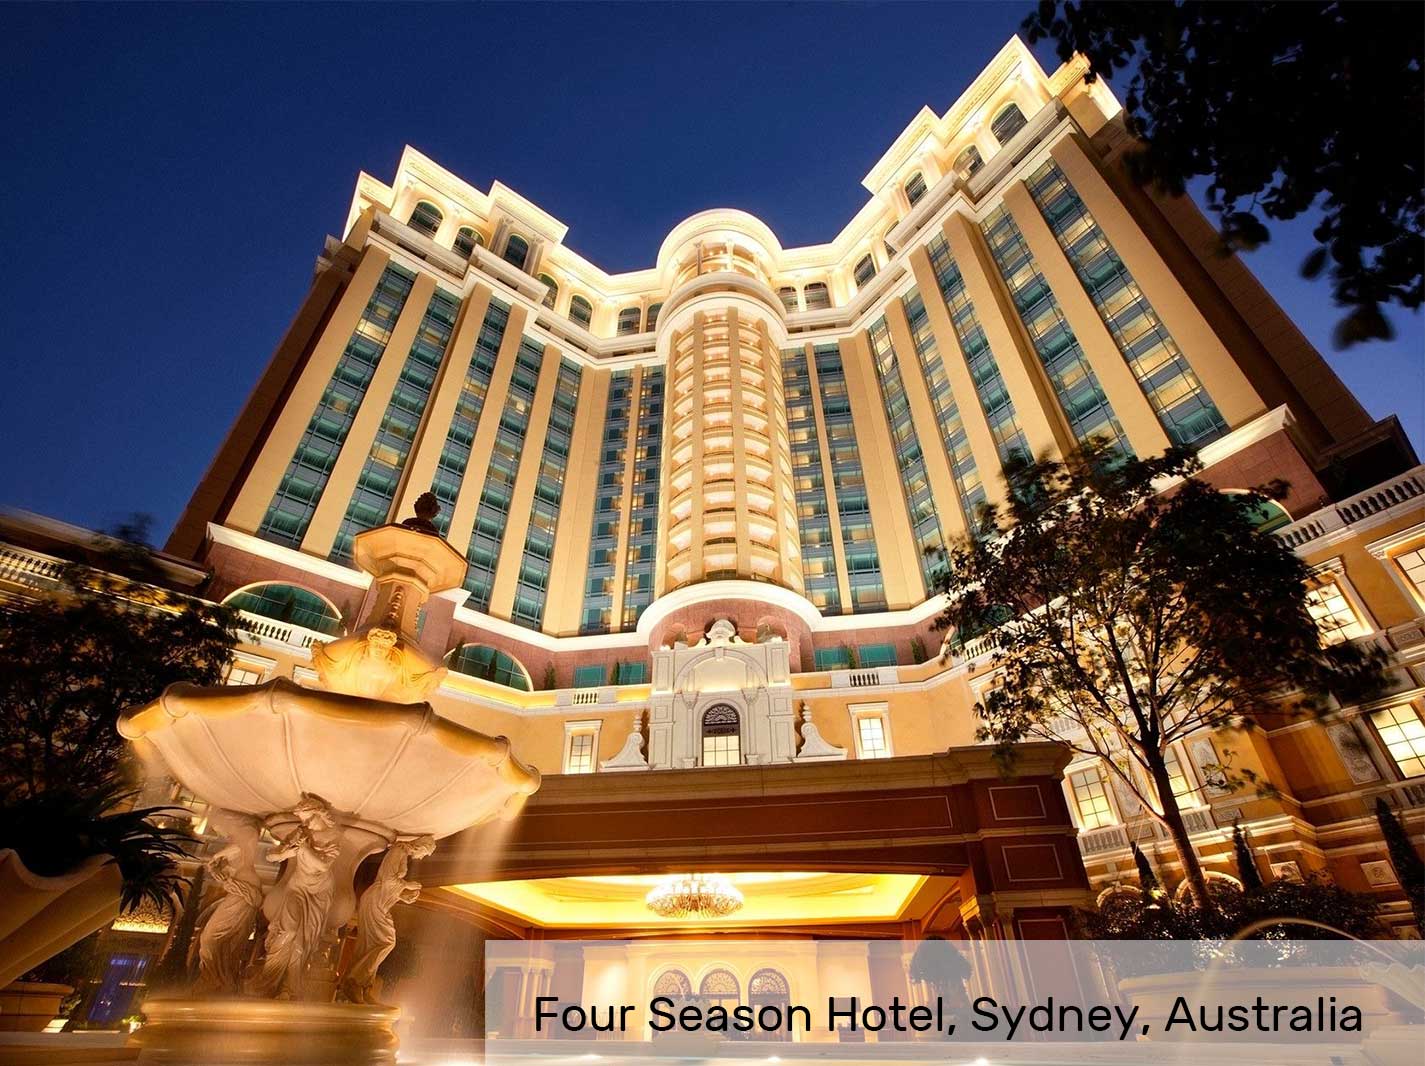 Four Season Hotel, Sydney, Australia